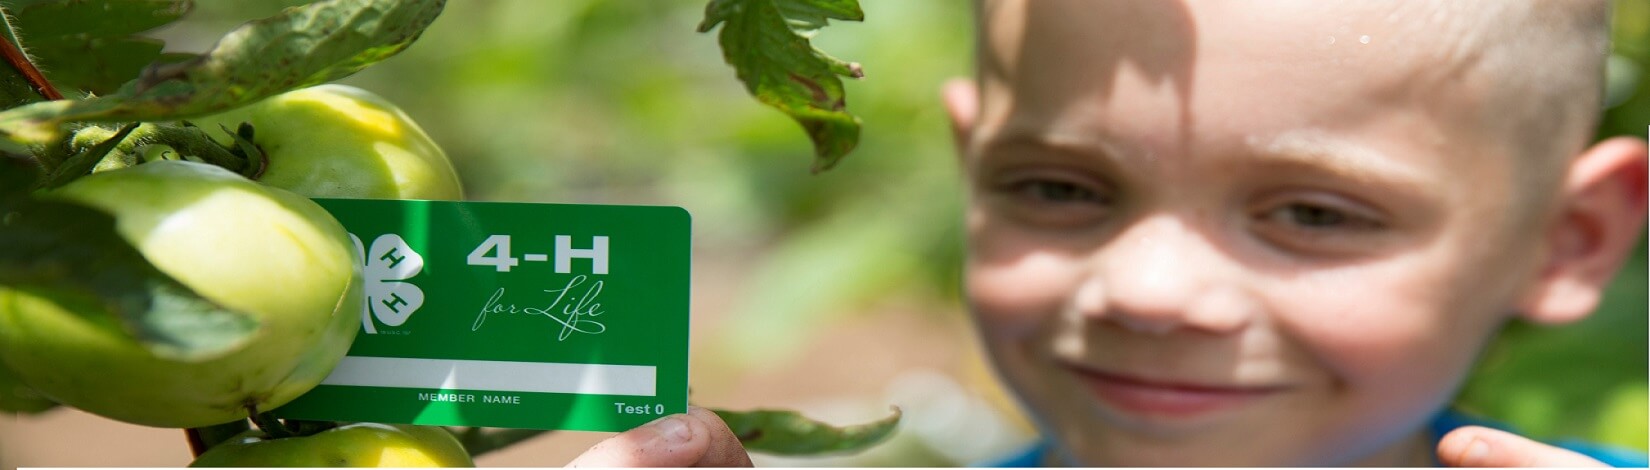 Child holding 4-H member card